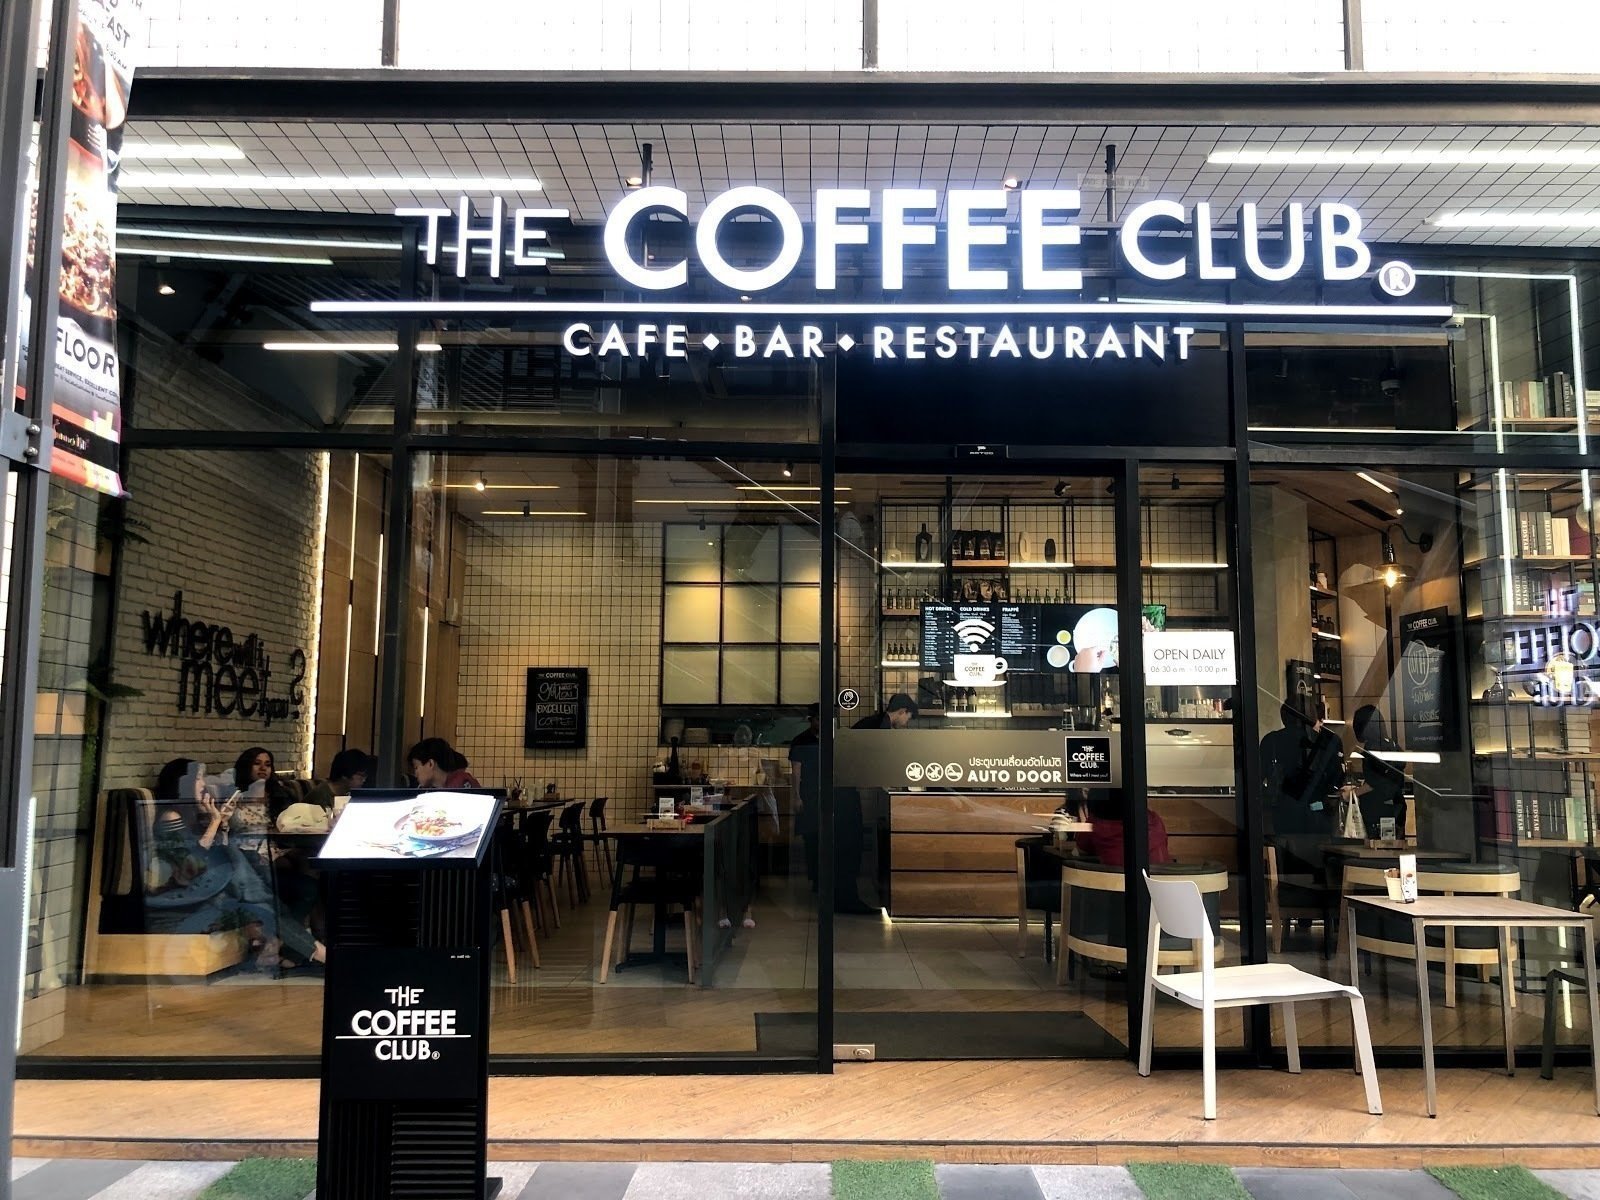 <span class="translation_missing" title="translation missing: en.meta.location_title, location_name: THE COFFEE CLUB - Summer Hill, city: Bangkok">Location Title</span>